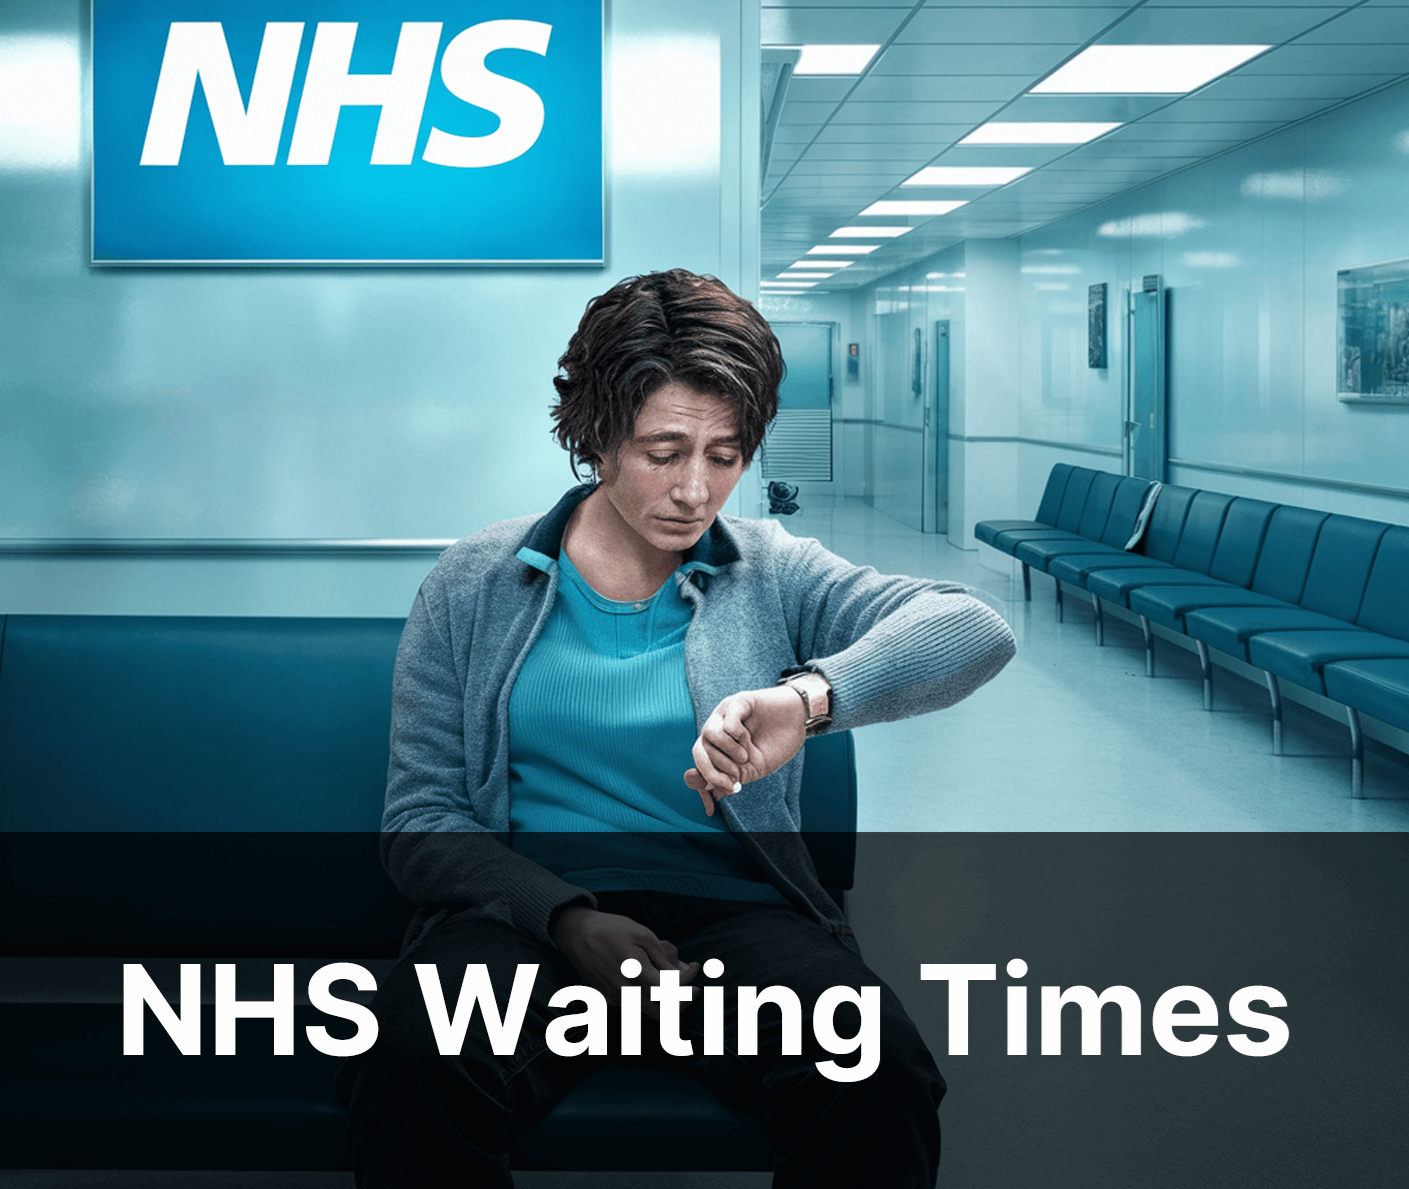 NHS waiting times